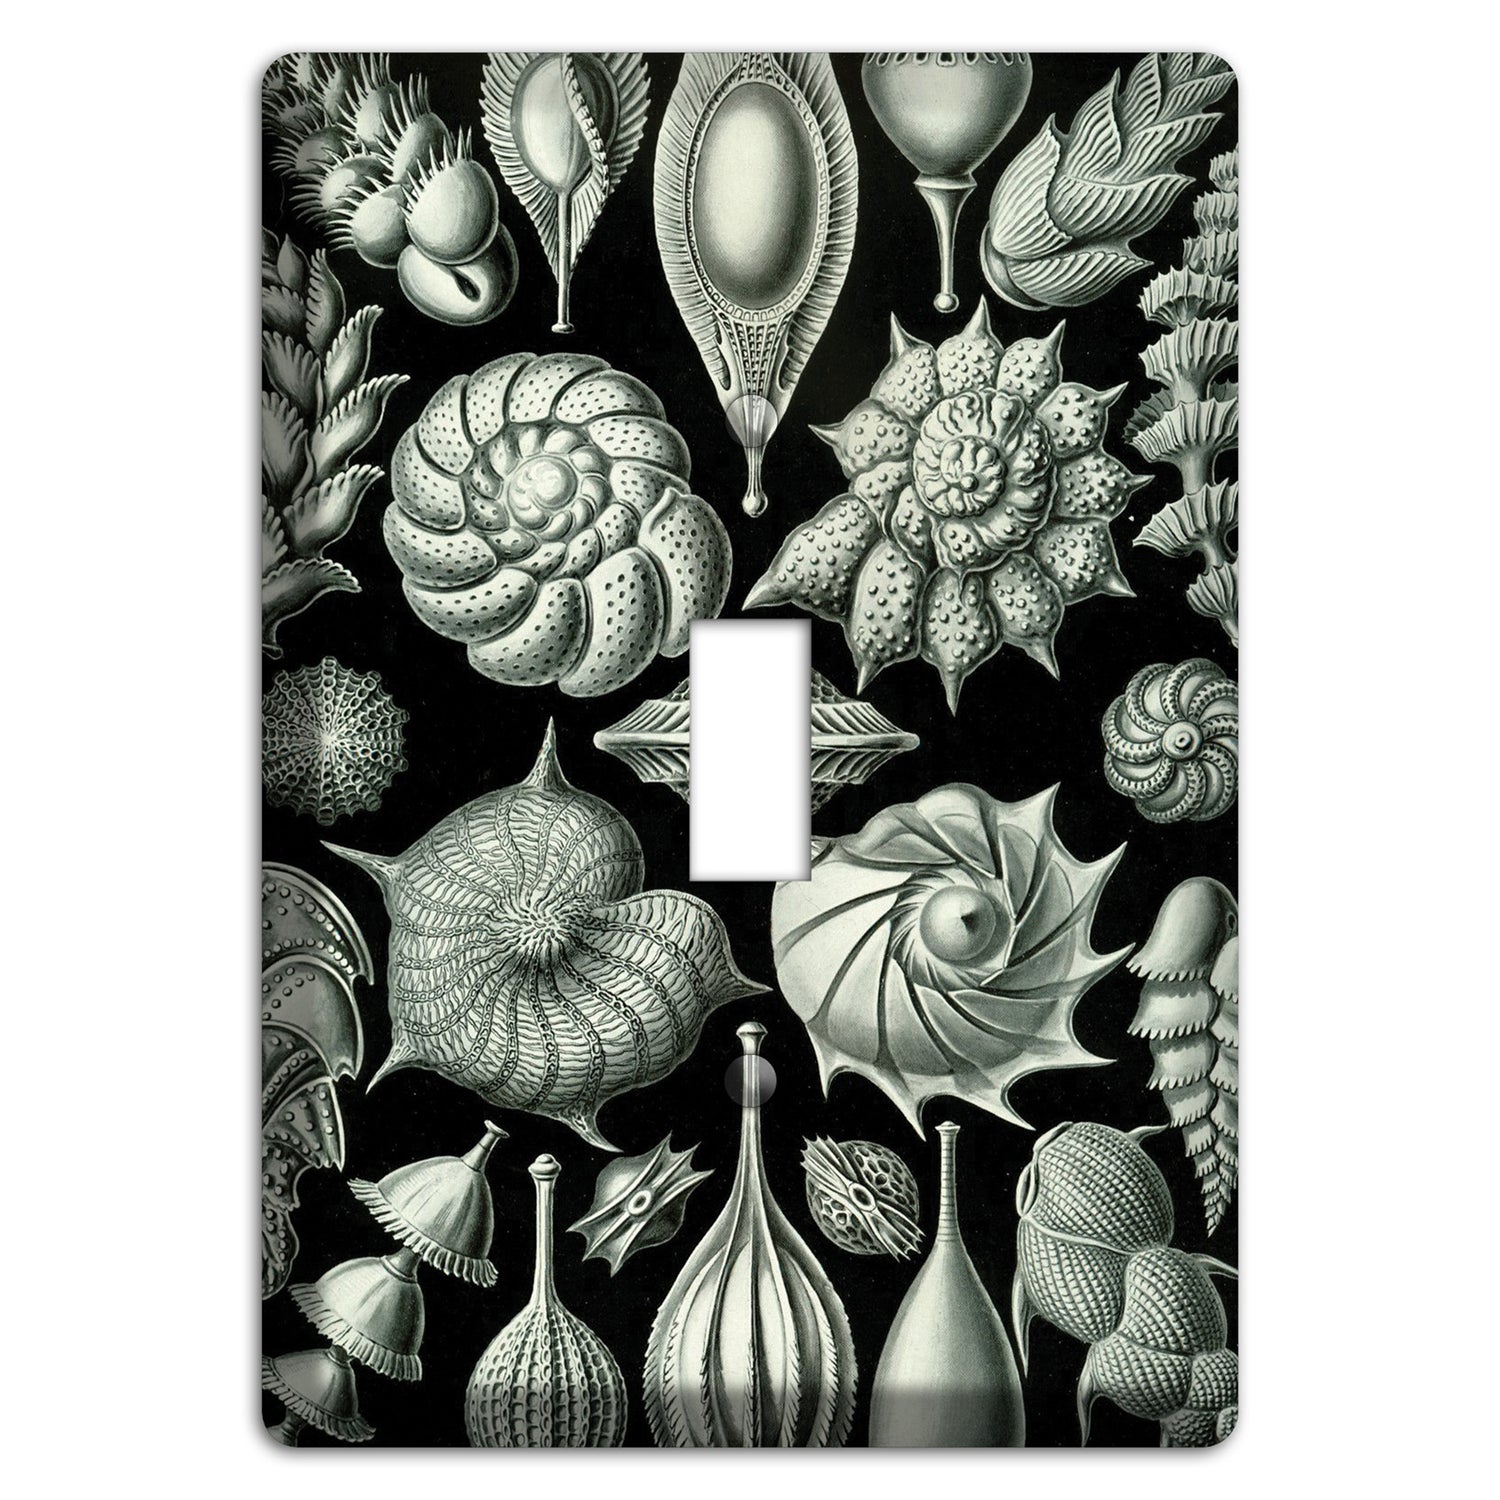 Haeckel - Thalamophora Cover Plates